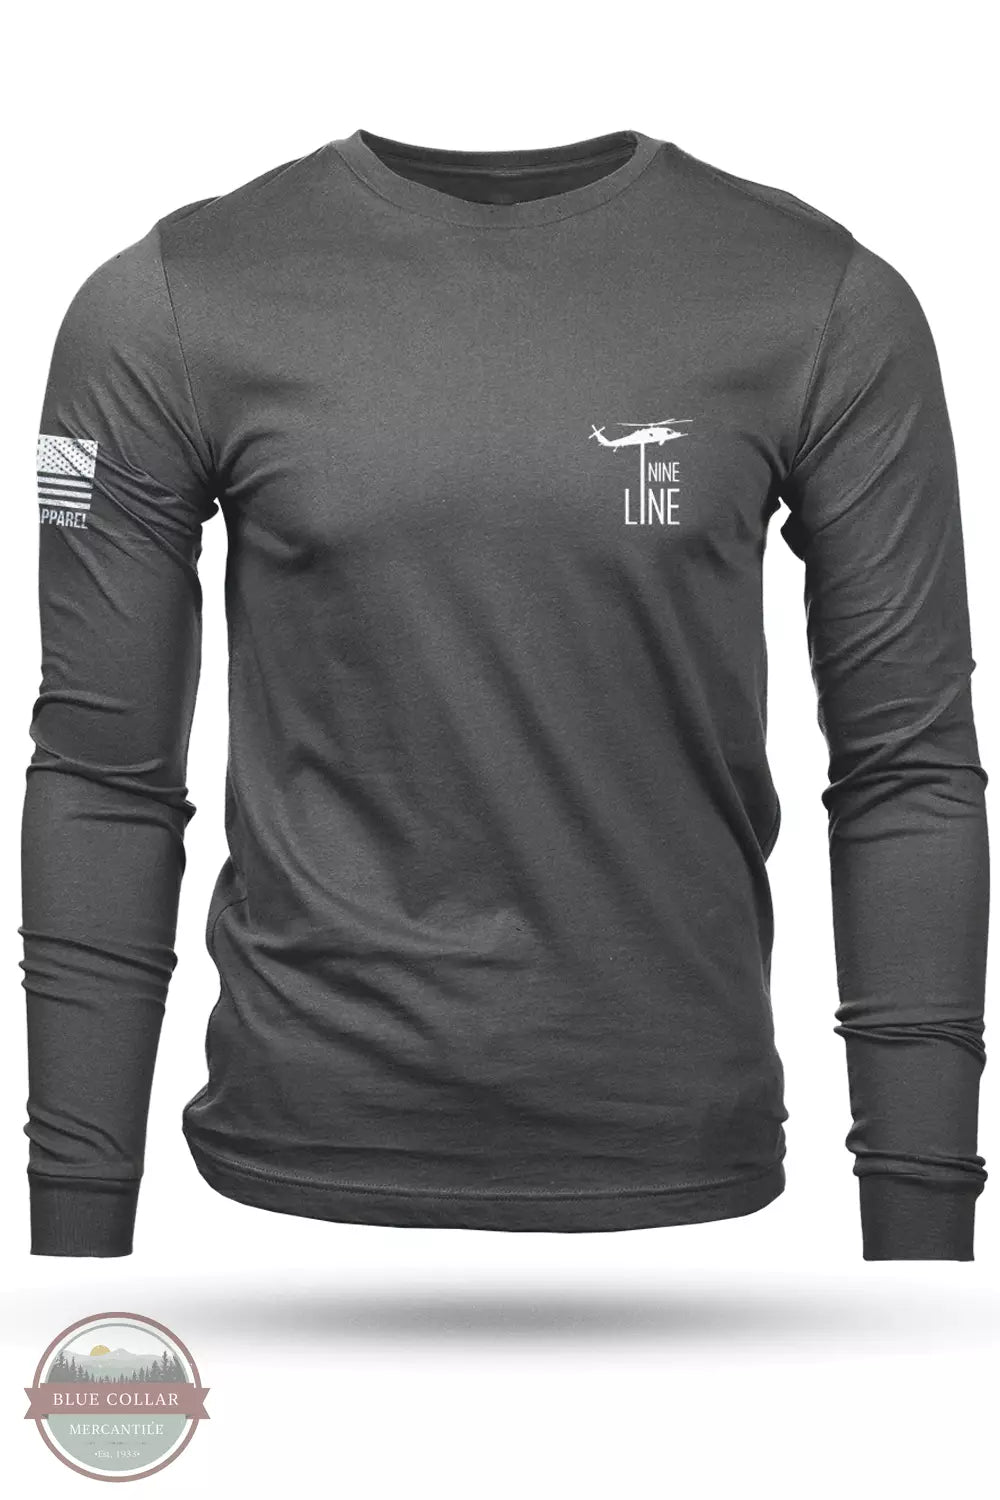 Nine Line OATH-LS-HEAVYMETAL Grey The Oath Long Sleeve T-Shirt Front View